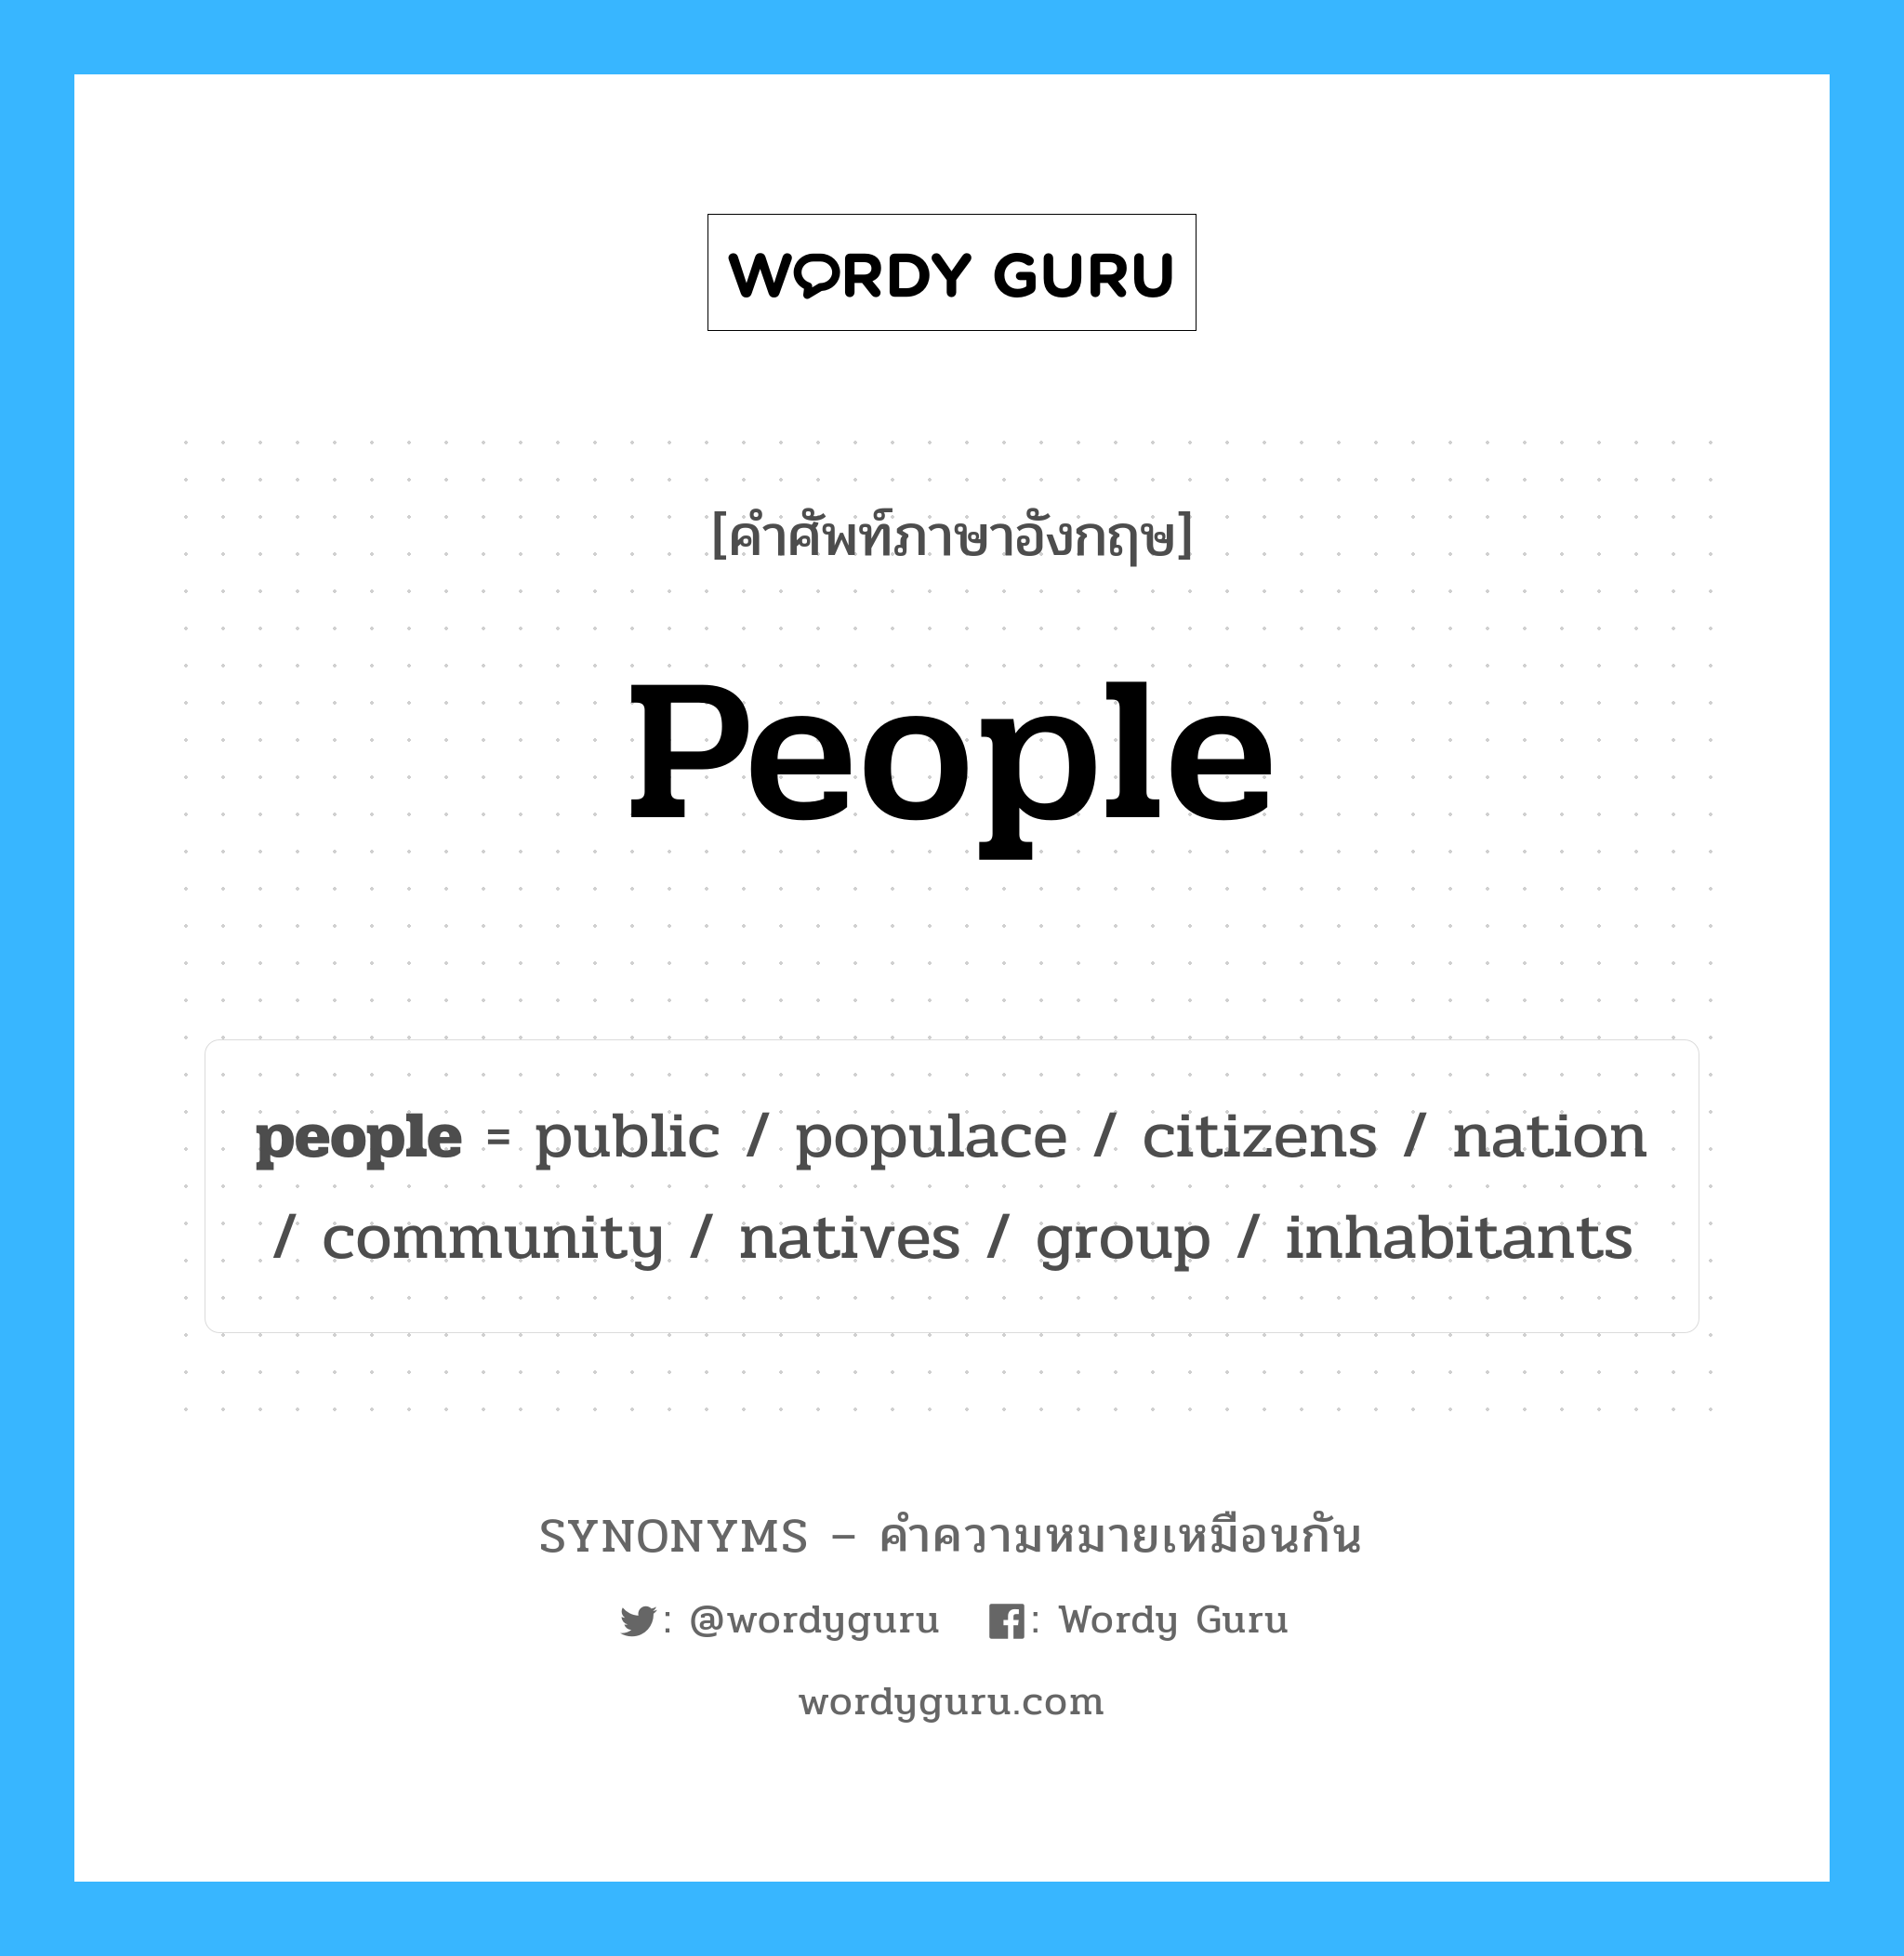 populace เป็นหนึ่งใน people และมีคำอื่น ๆ อีกดังนี้, คำศัพท์ภาษาอังกฤษ populace ความหมายคล้ายกันกับ people แปลว่า ประชาชน หมวด people